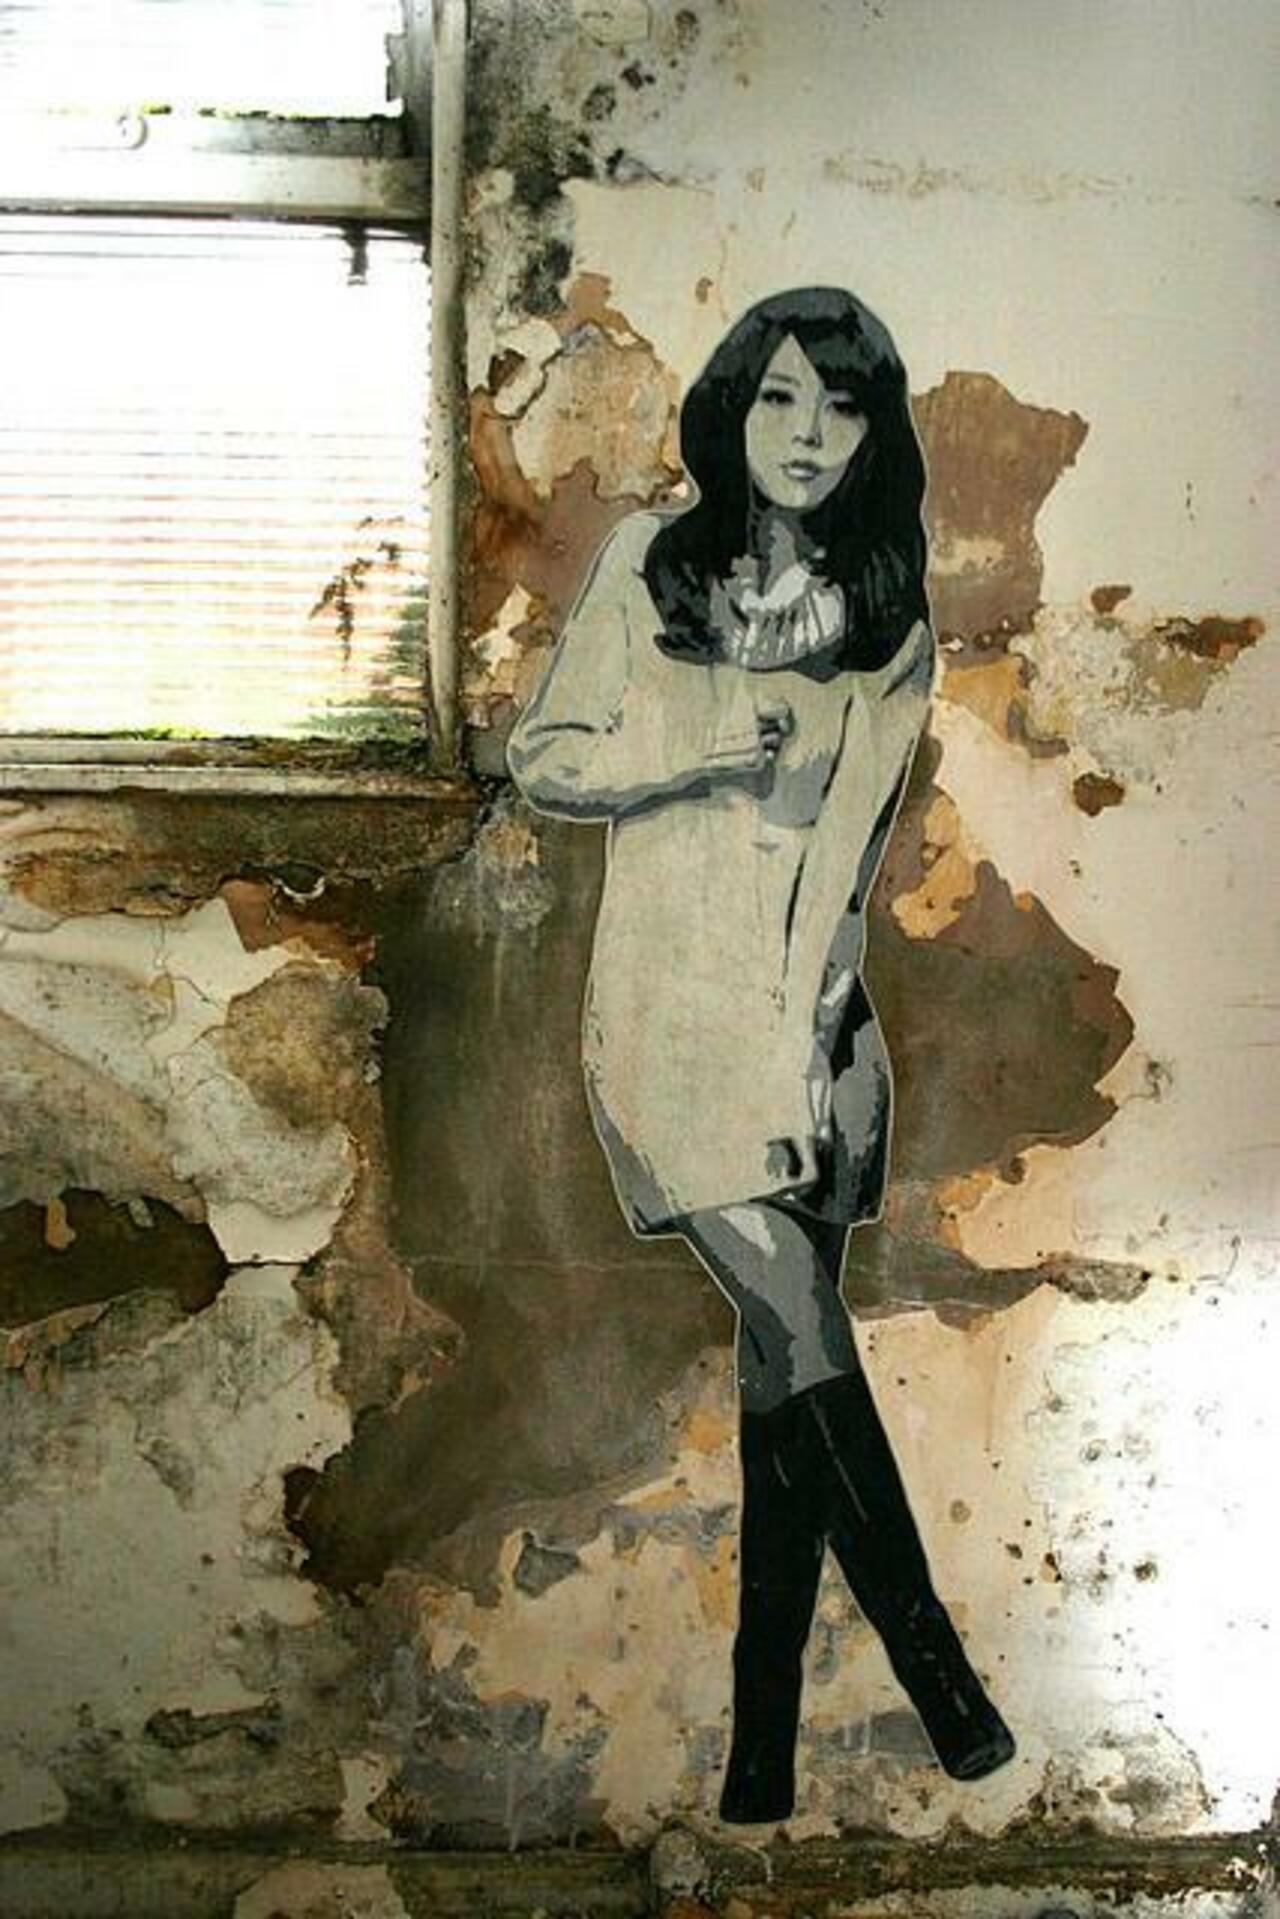 "@DlgermanyDavid: RT "@5putnik1: China Girl / Retro Swag    • #streetart #graffiti #art #funky #dope . : http://t.co/1mEsZMsWgC”"